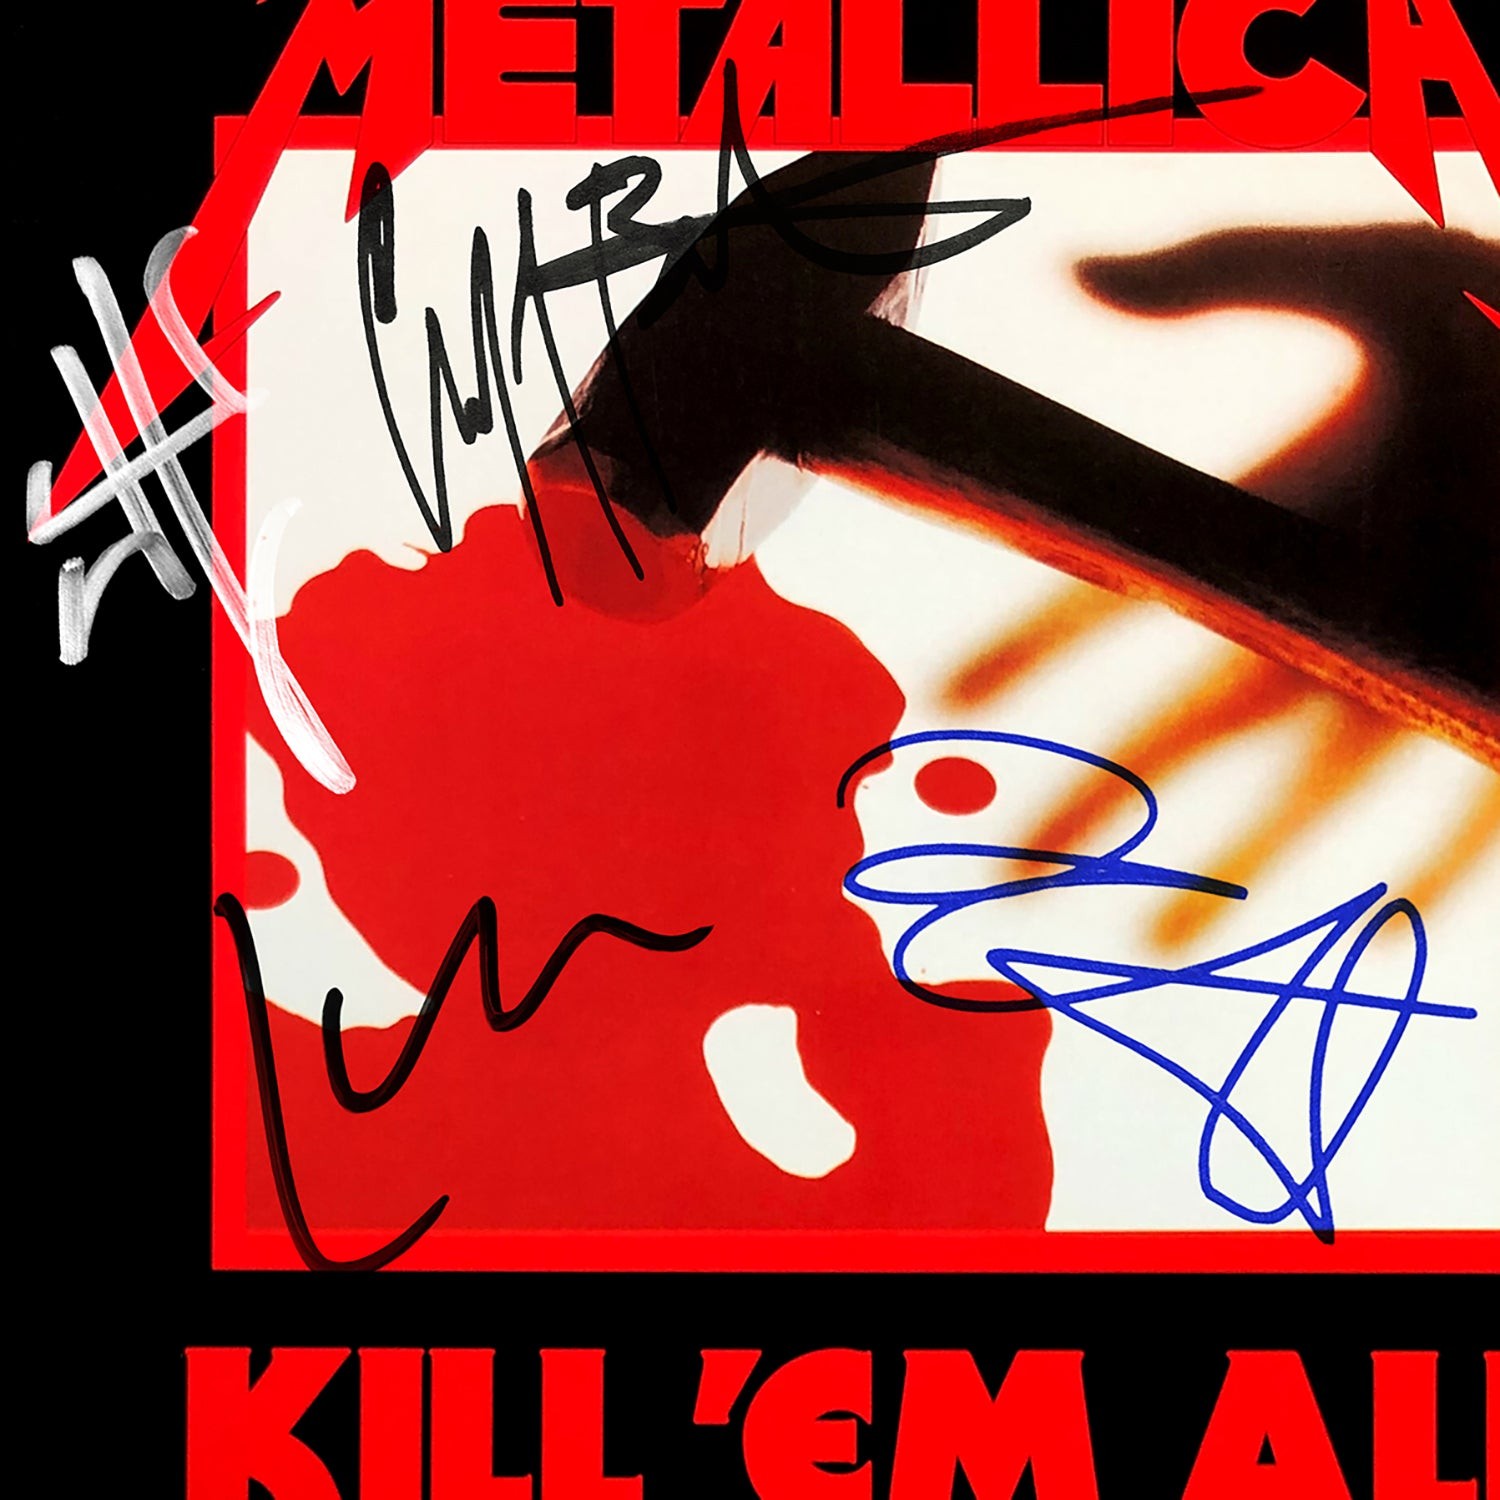 Metallica - Kill'Em All Platinum LP Limited Signature Edition Custom Frame